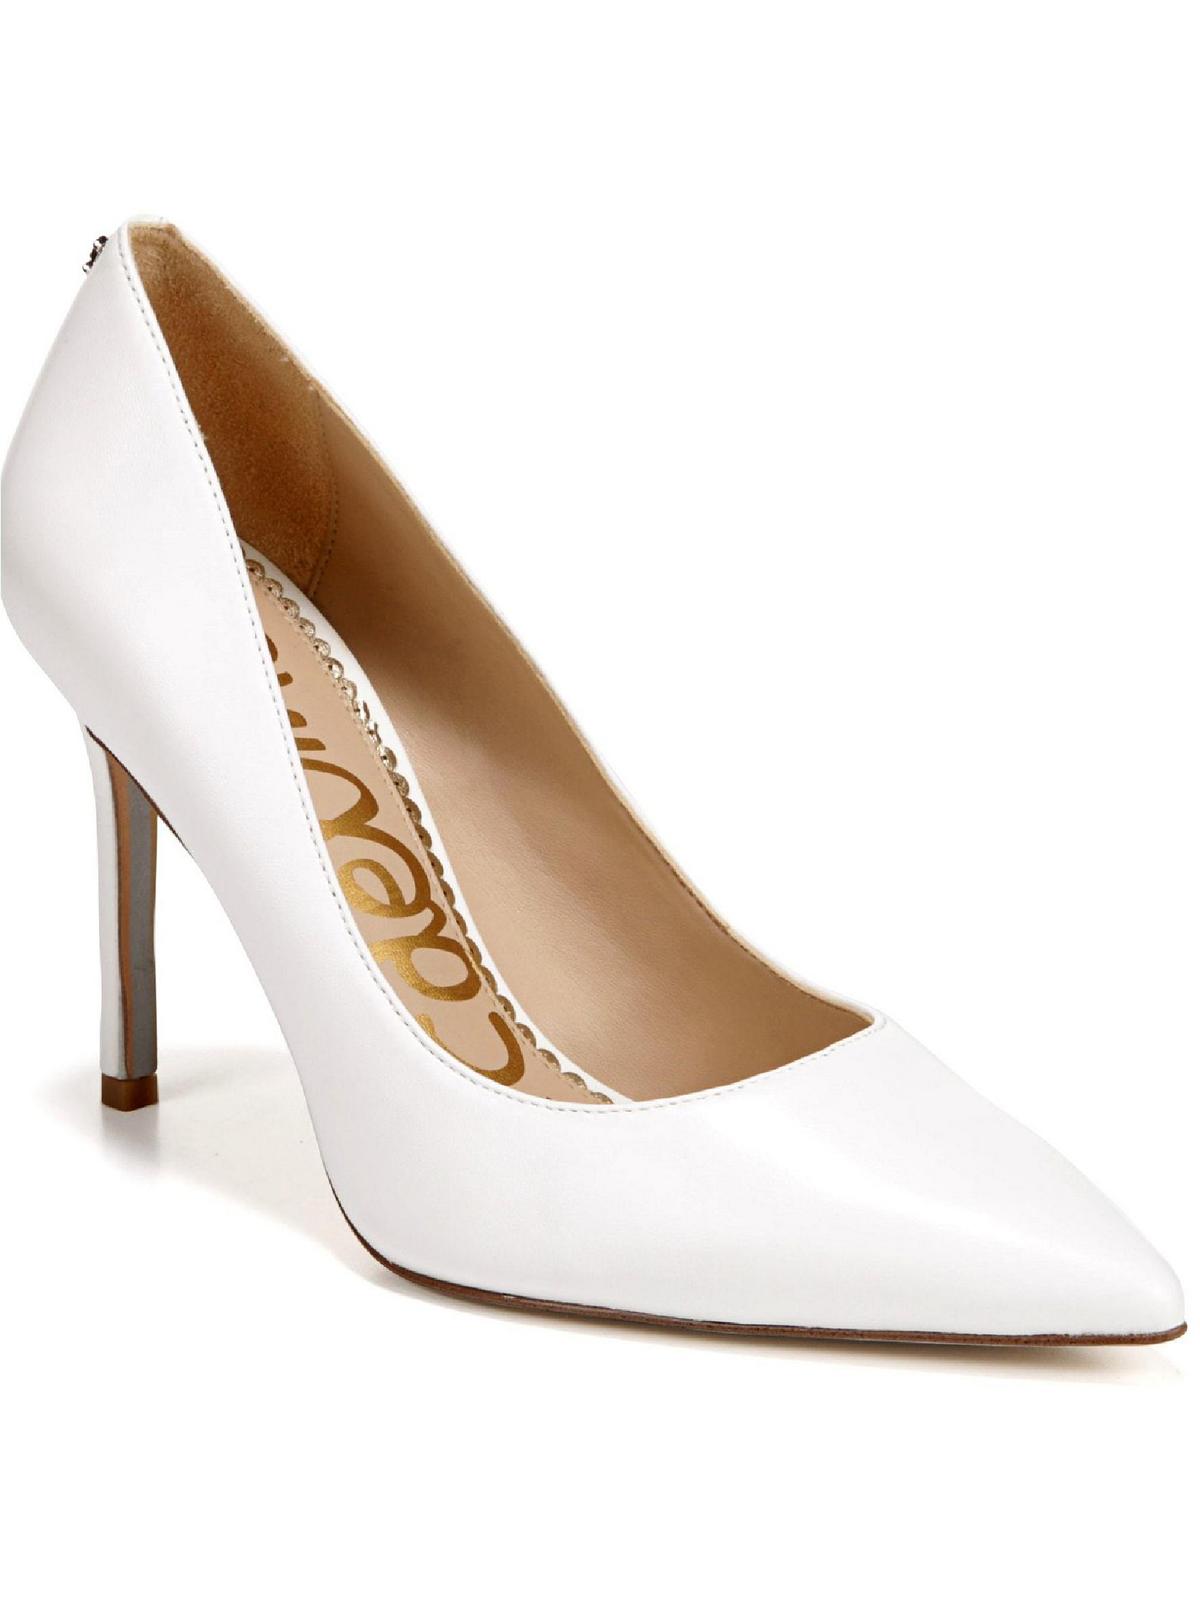 Sam Edelman Womens Hazel Leather Heels Pumps White 6 Medium (B,M) - image 1 of 3